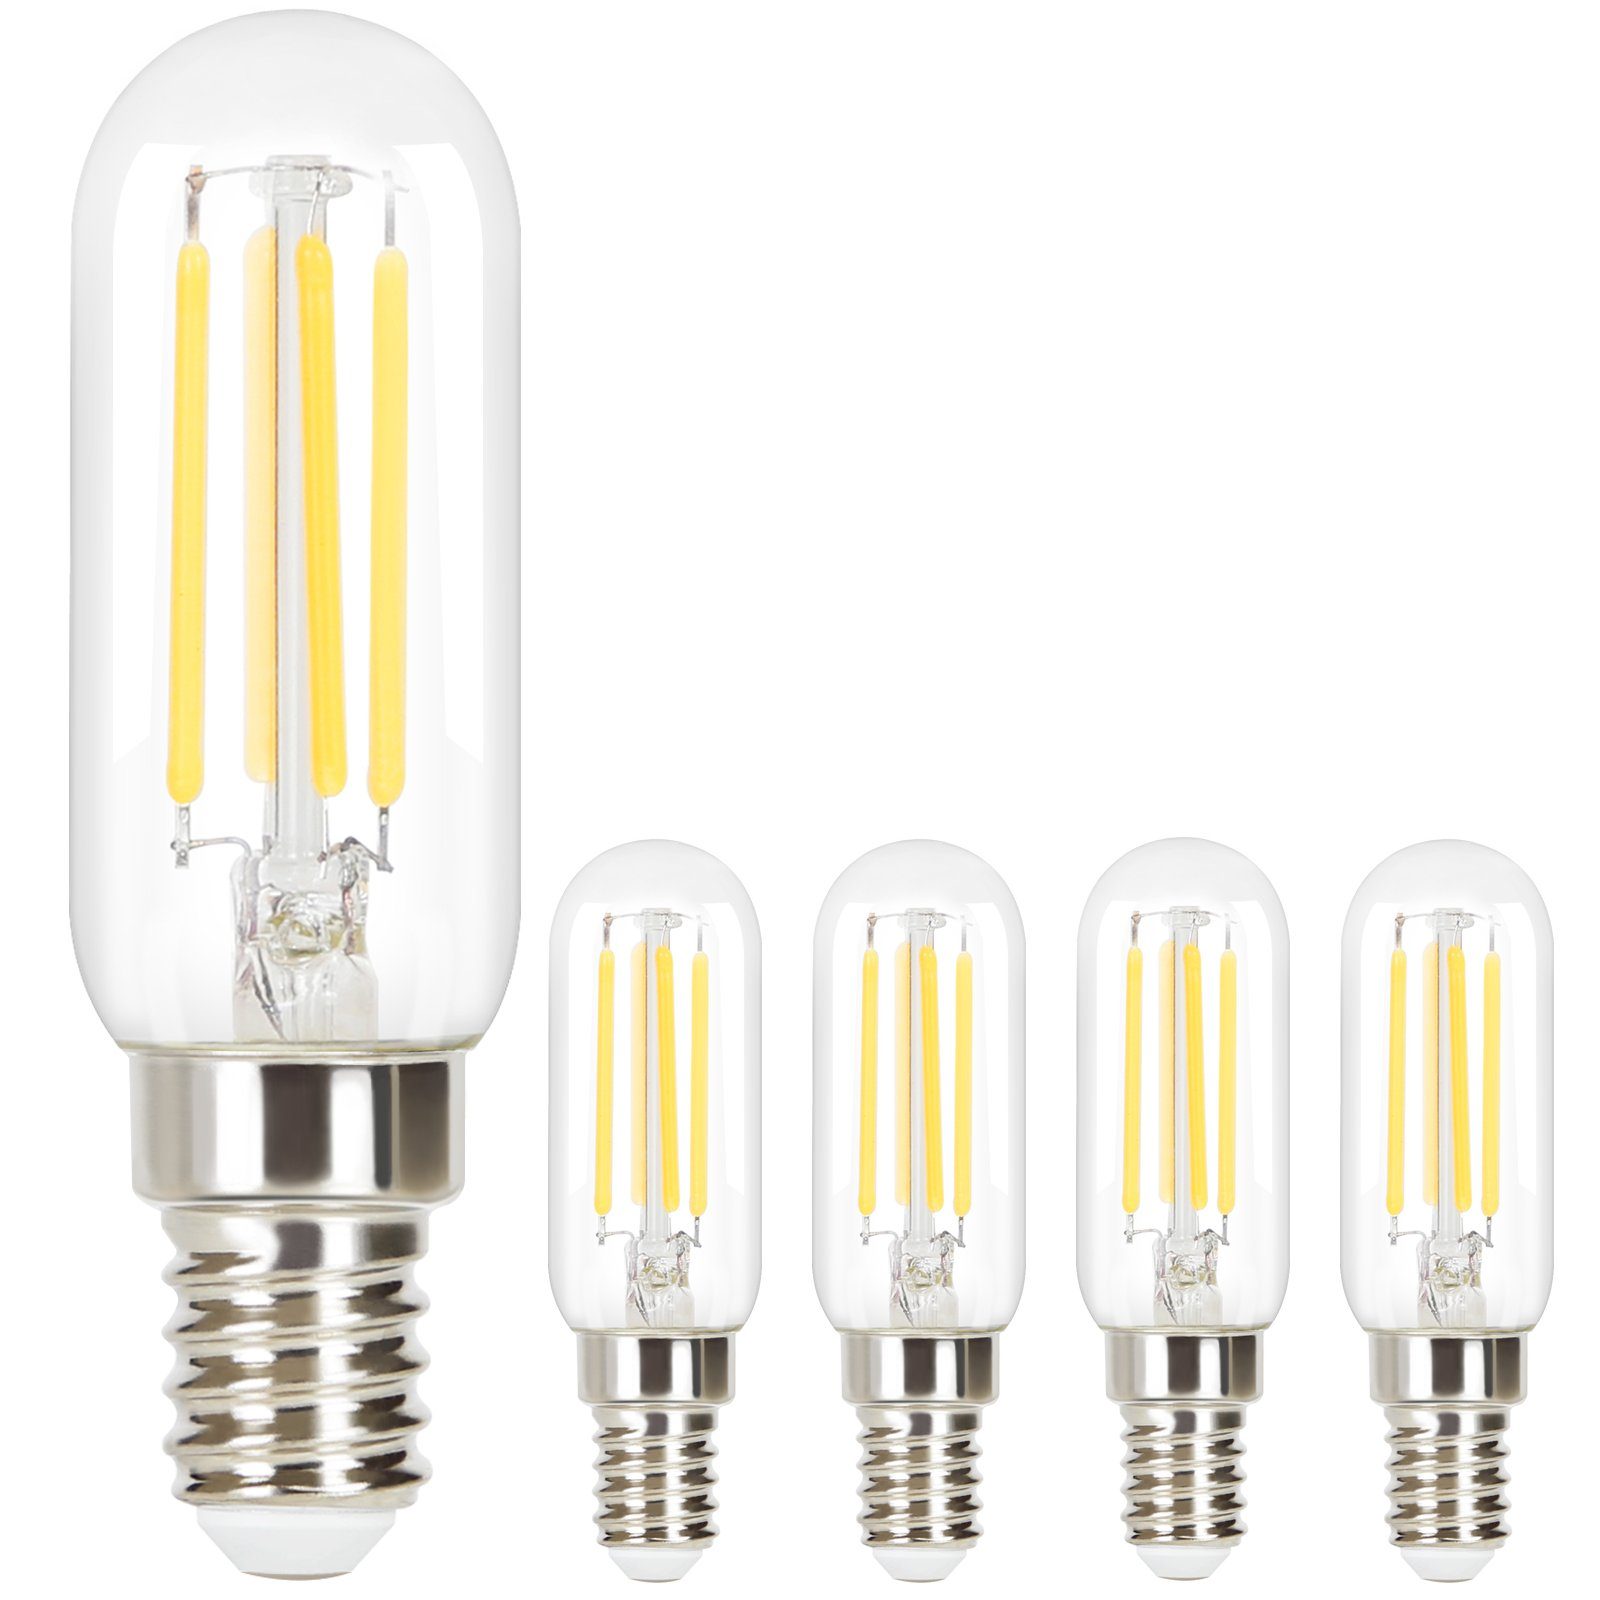 ZMH »Edison LED Vintage Glühbirne - T25 2700K« LED-Leuchtmittel, E14, 4  St., warmweiß, Filament Retro Glas Birne Energiesparlampe